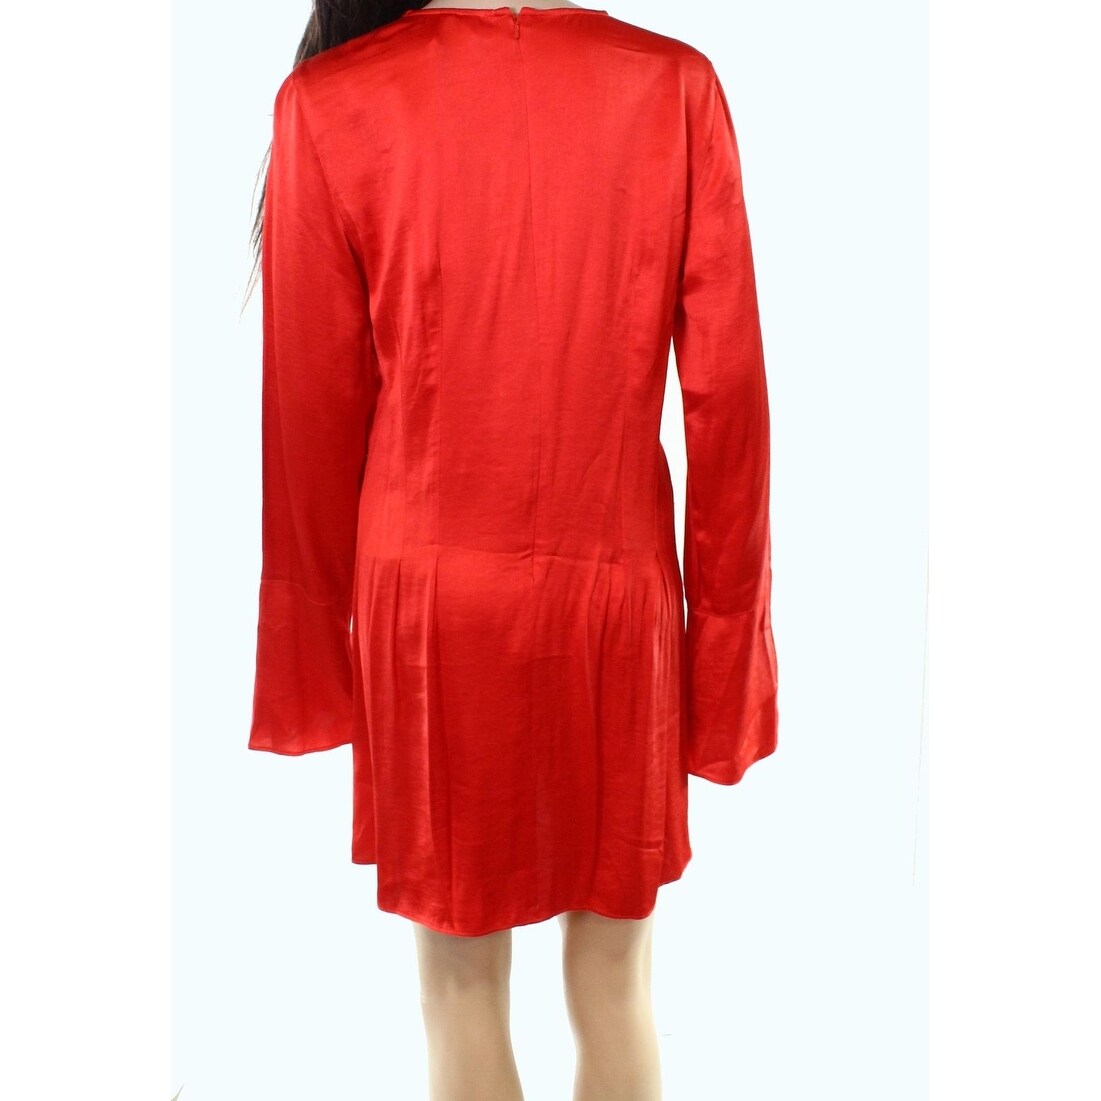 red satin shift dress